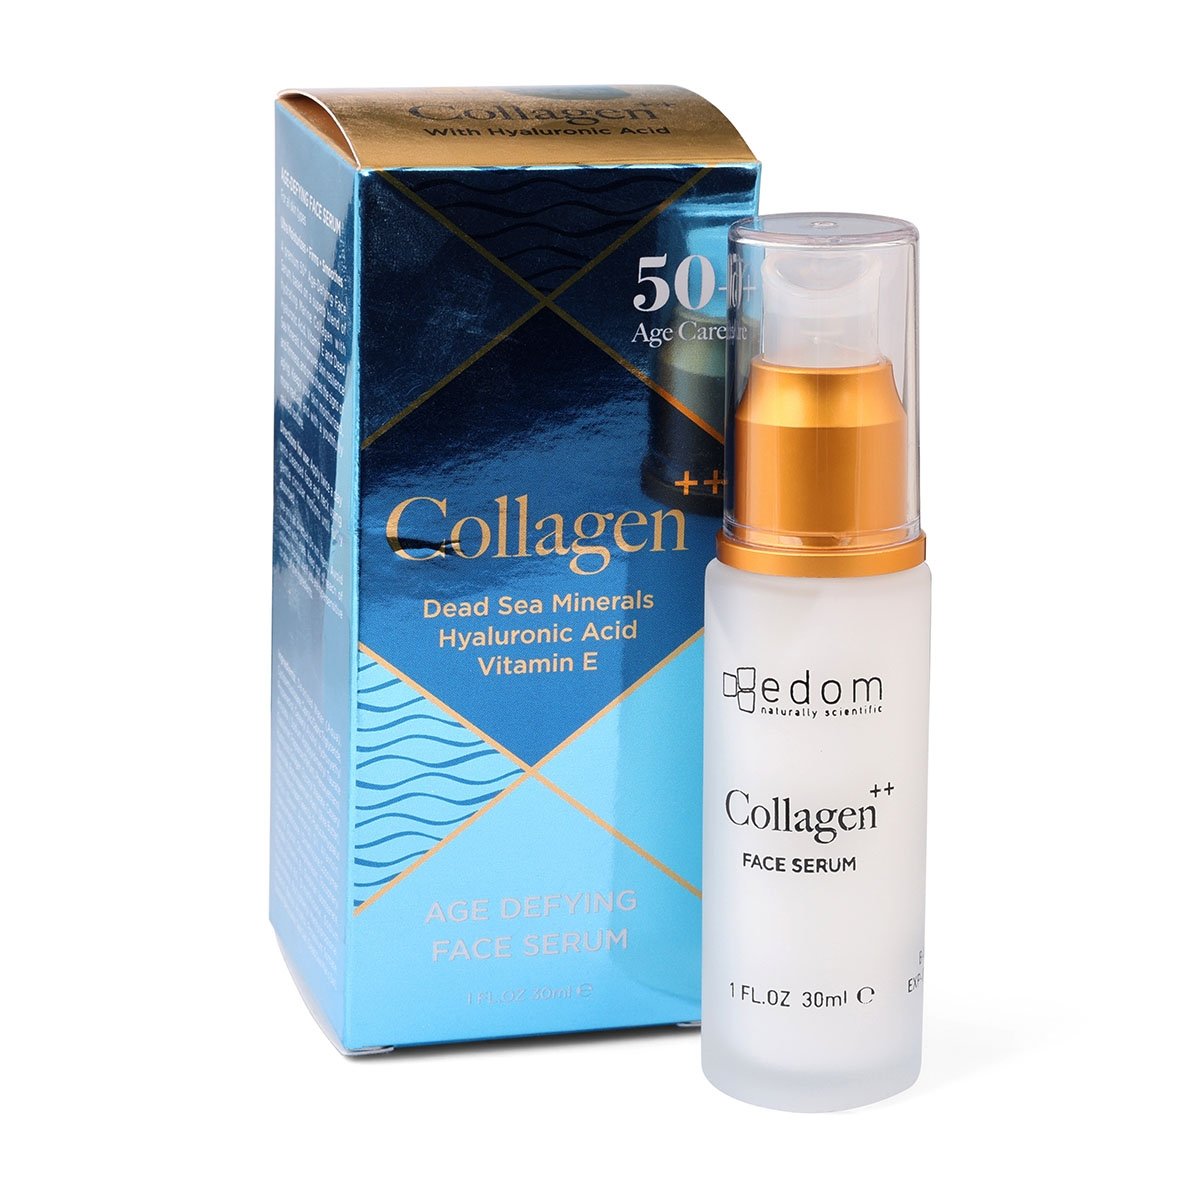 Edom Cosmetics Collagen Age-Defying Face Serum (50+) - 1